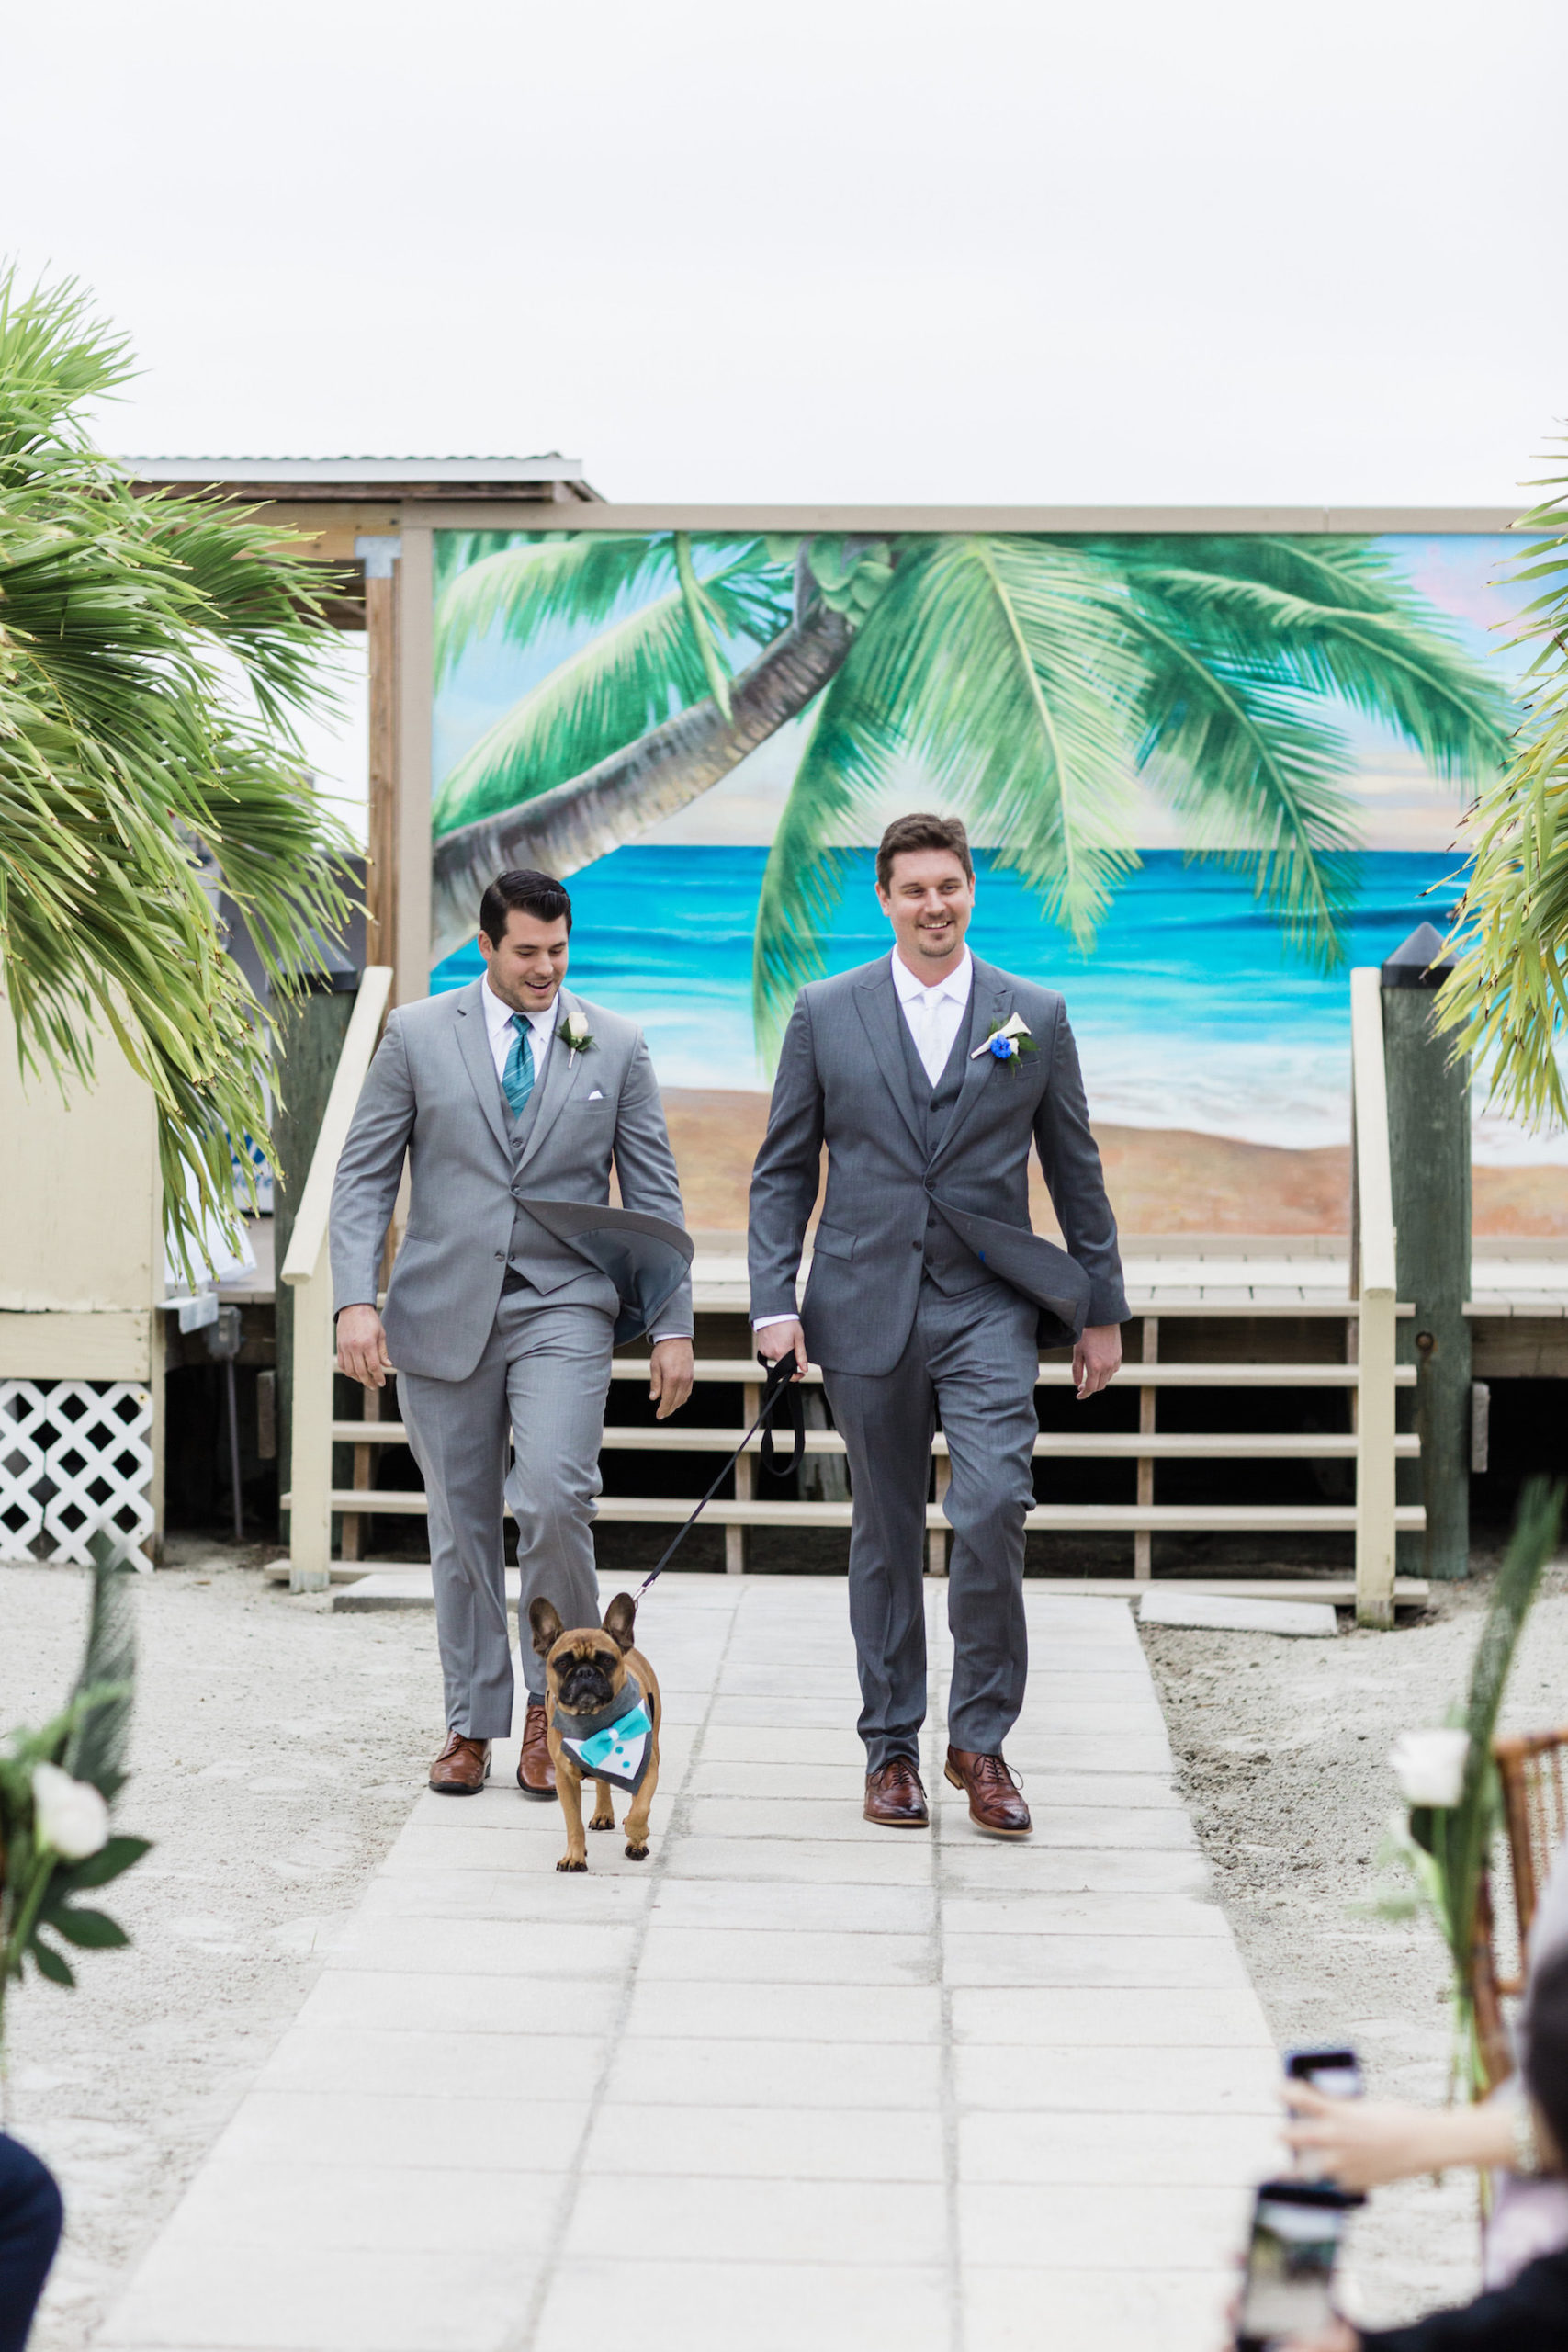 Dog Walking Down Aisle during Wedding Ceremony | Wedding Dog of Honor | Dog Wedding Bandana Bow Tie | Grey Charcoal Groomsmen Guits